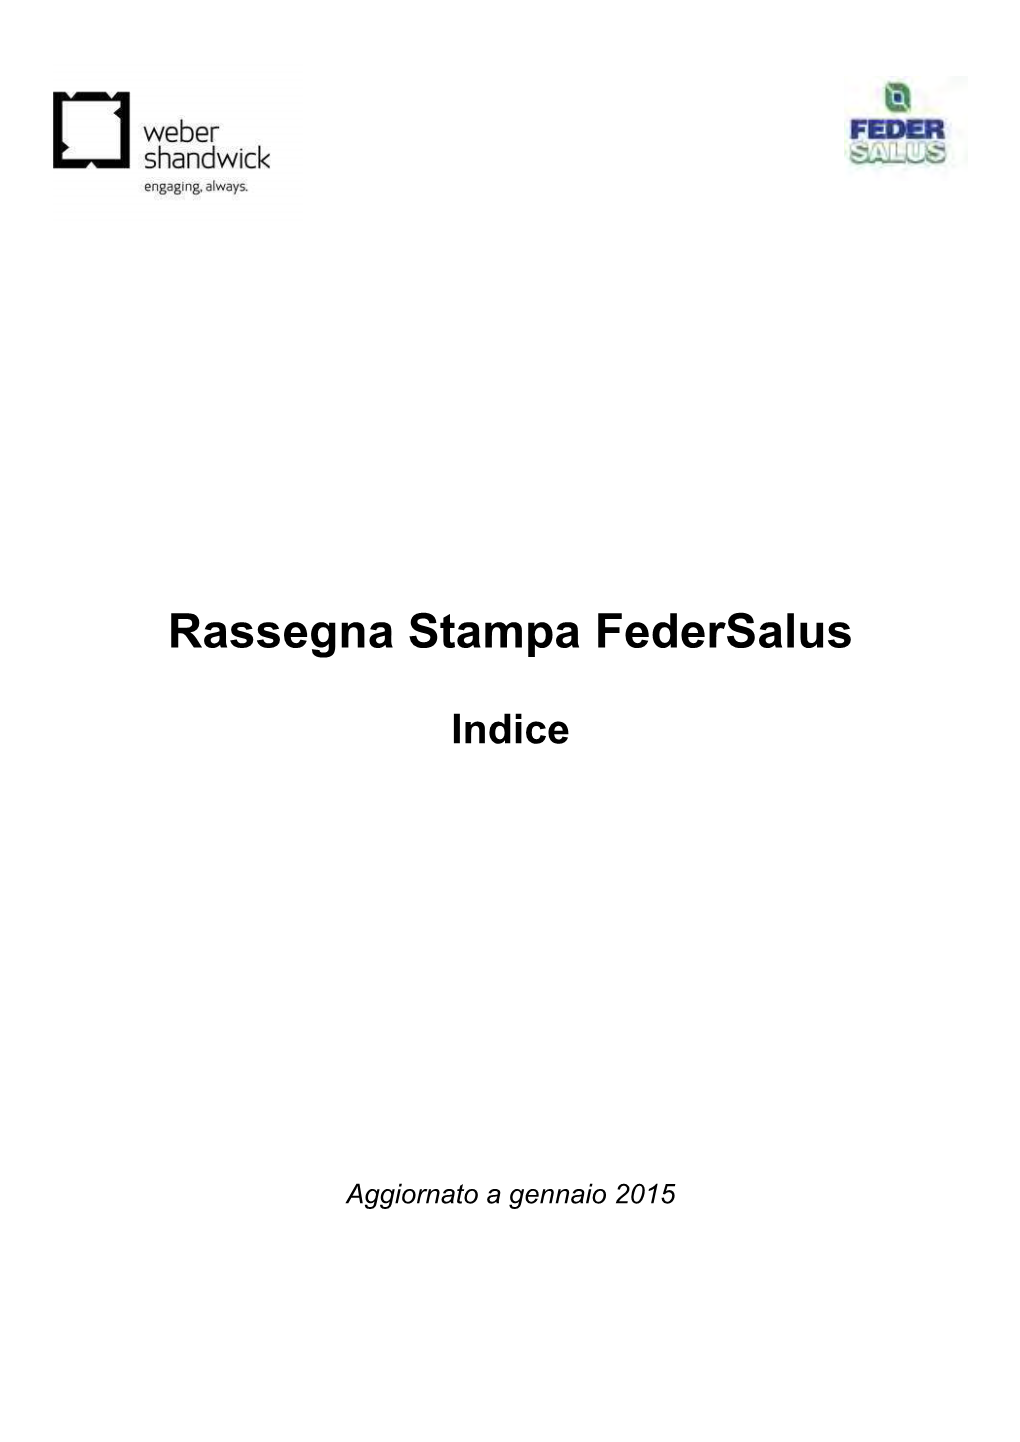 Rassegna Stampa Federsalus 2014